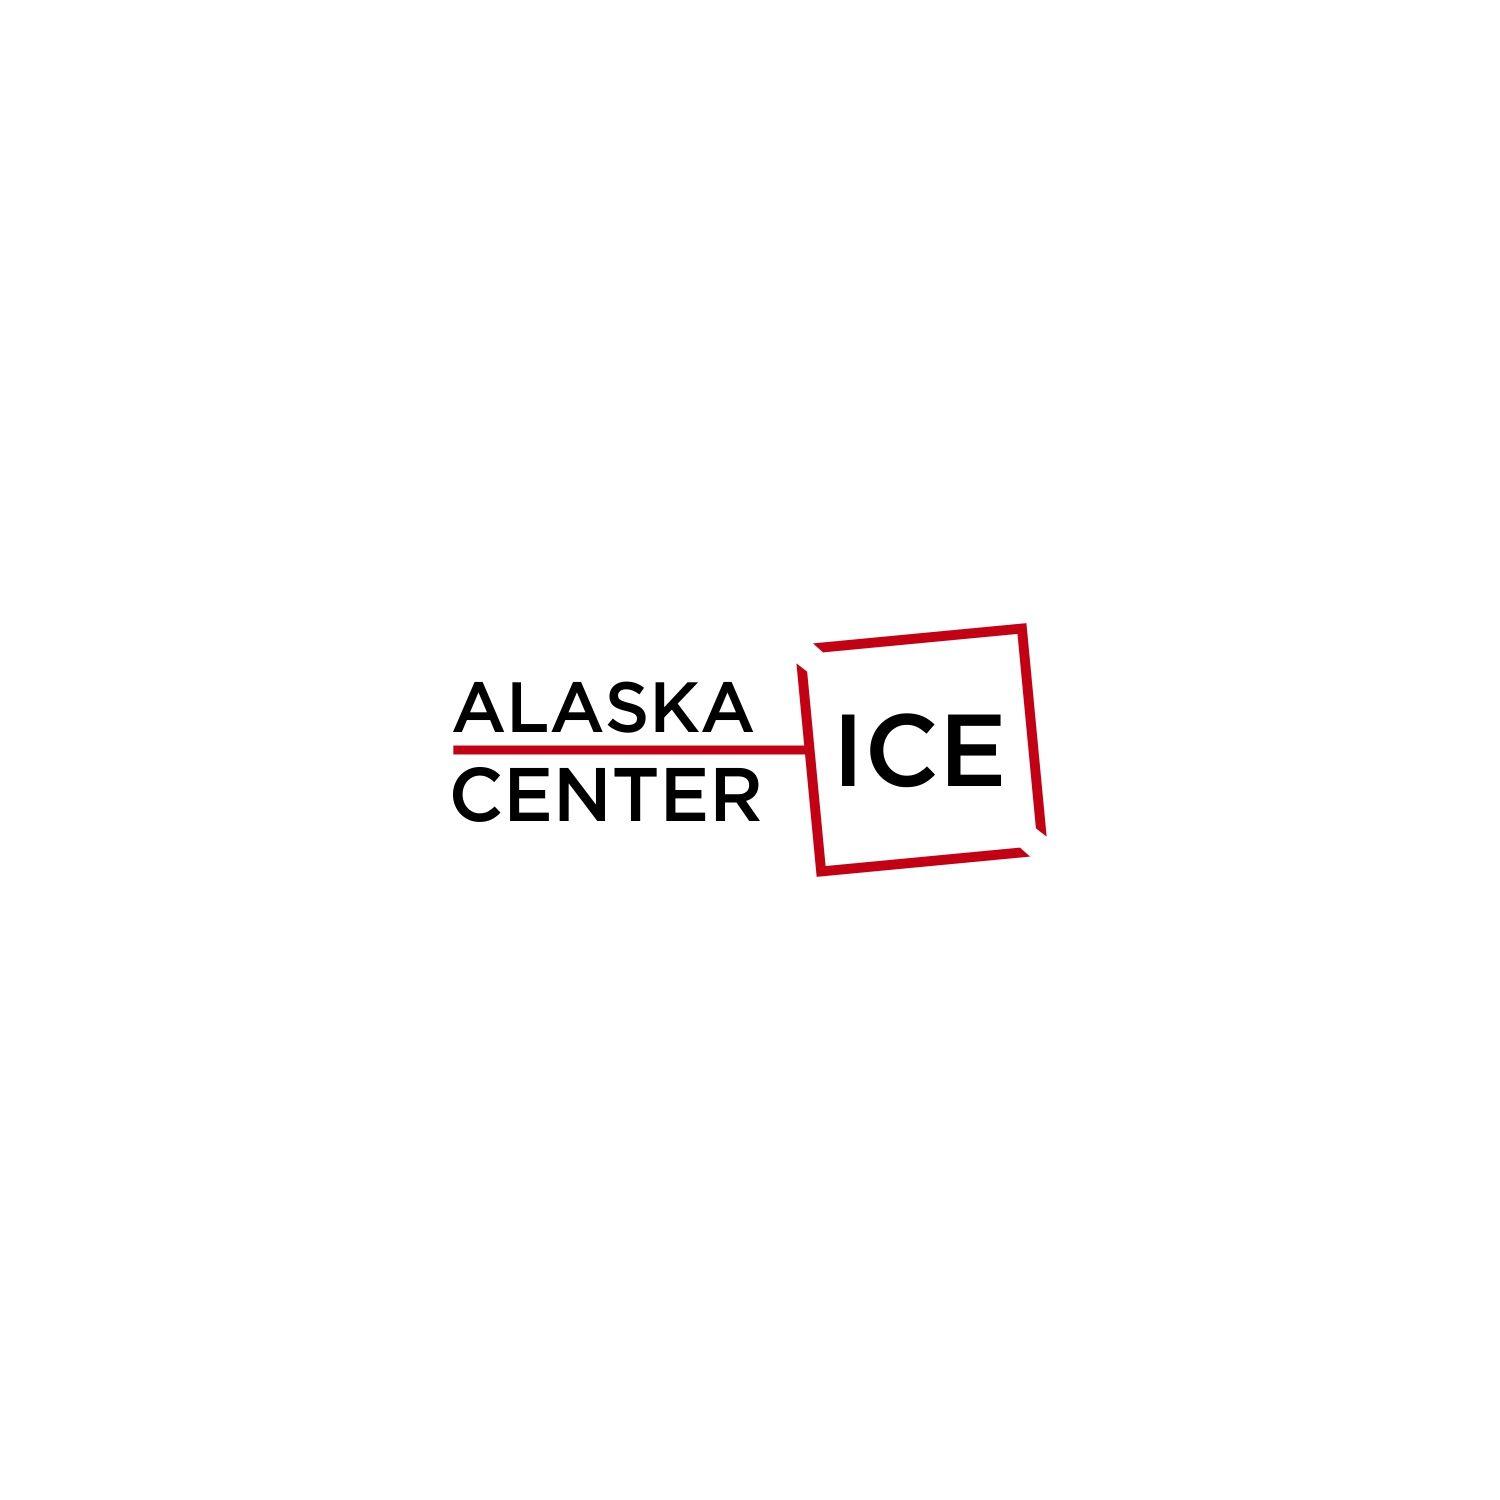 Black and Orange Alaska Logo - Business Logo Design for Alaska Center ICE by luvi.rafael. Design